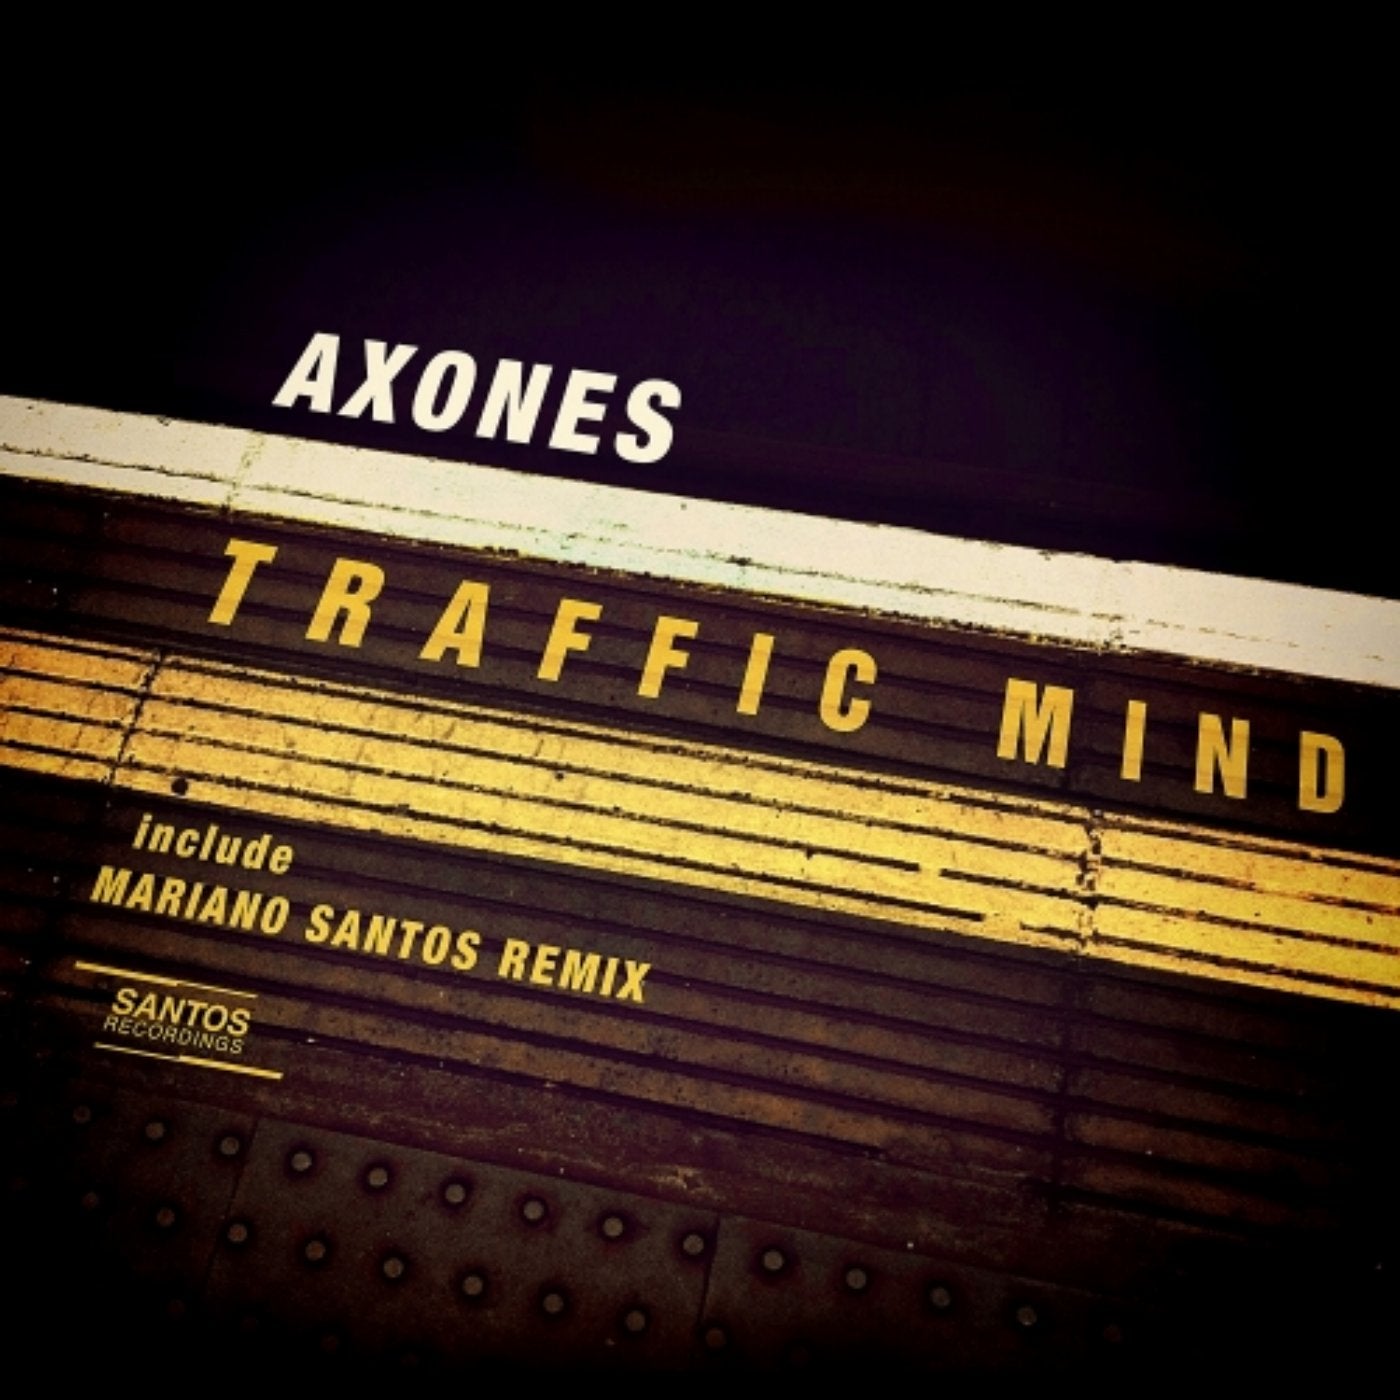 Traffic Mind